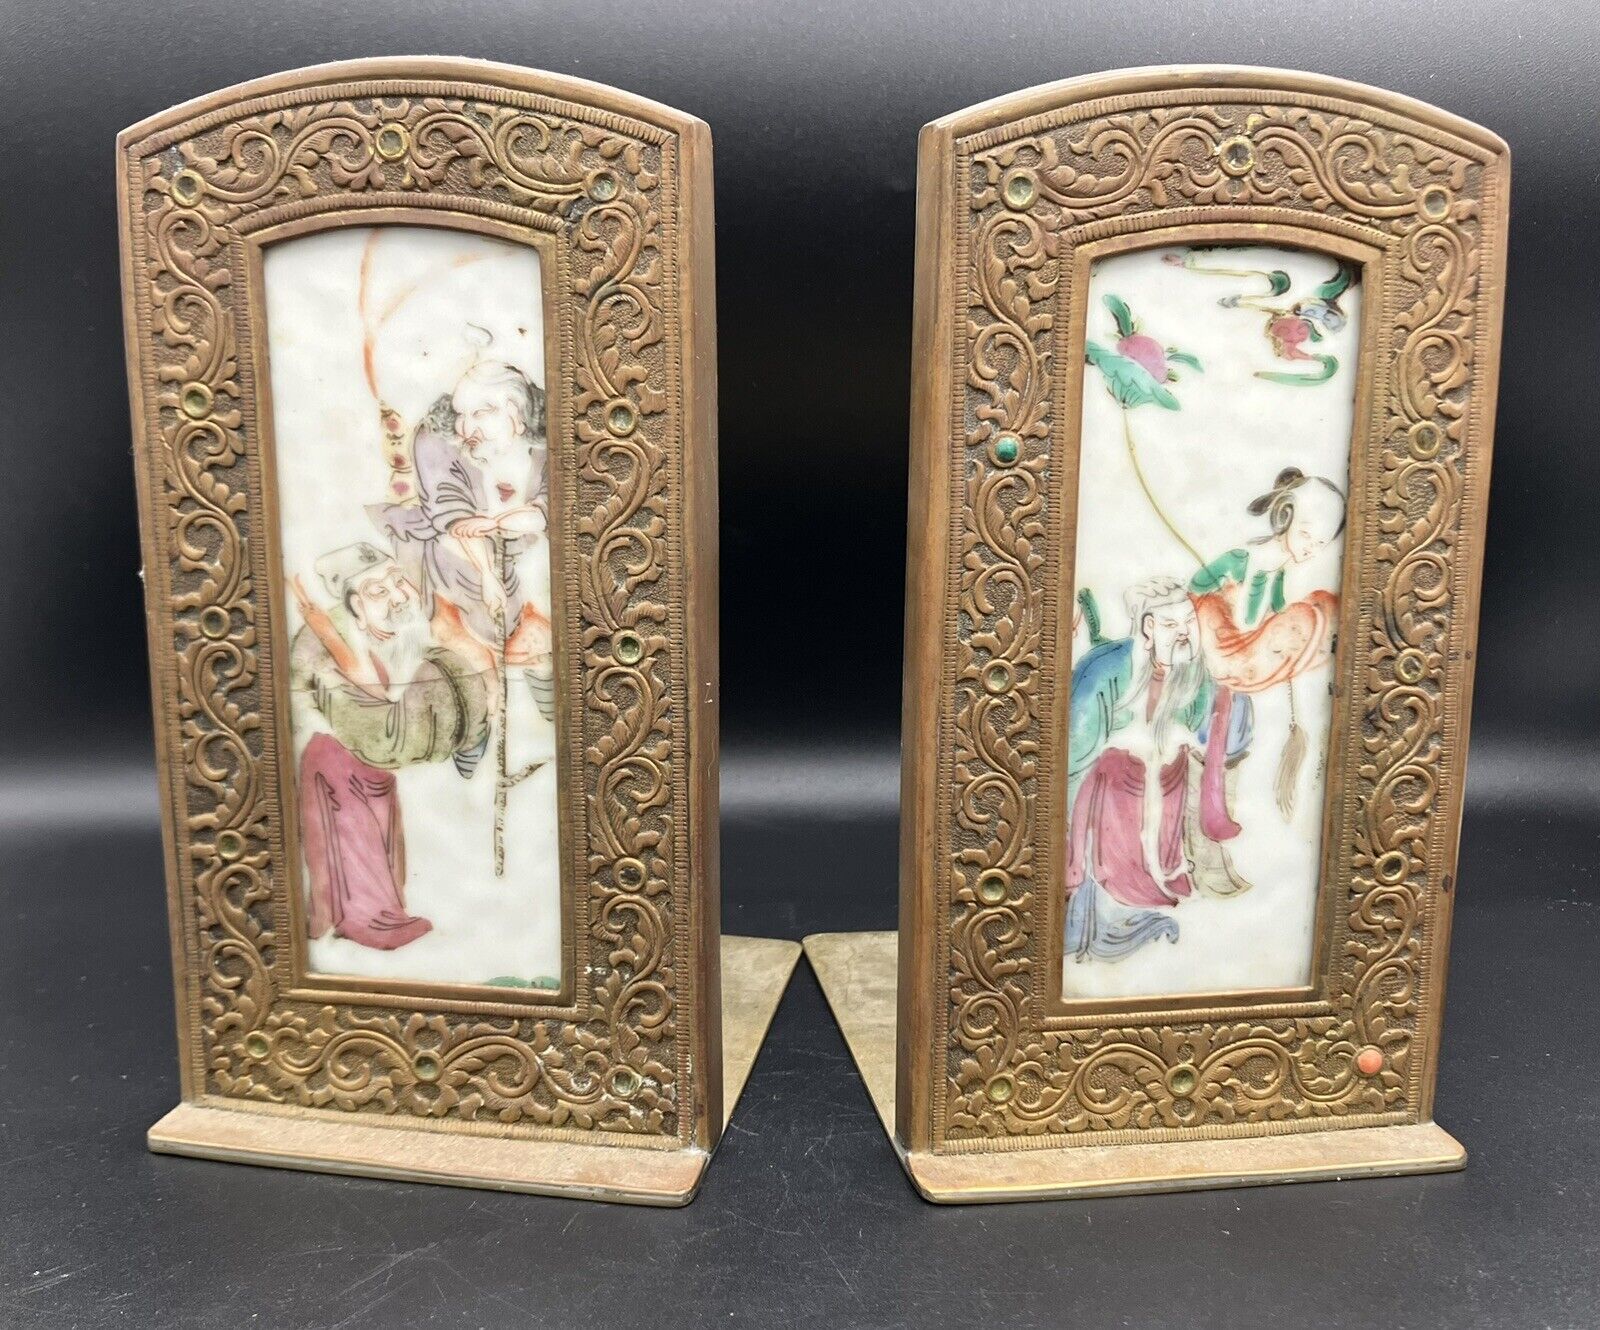 2 Antique/VTG Asian Painted Porcelain Plaque Tiles in Bronze Brass Bookends